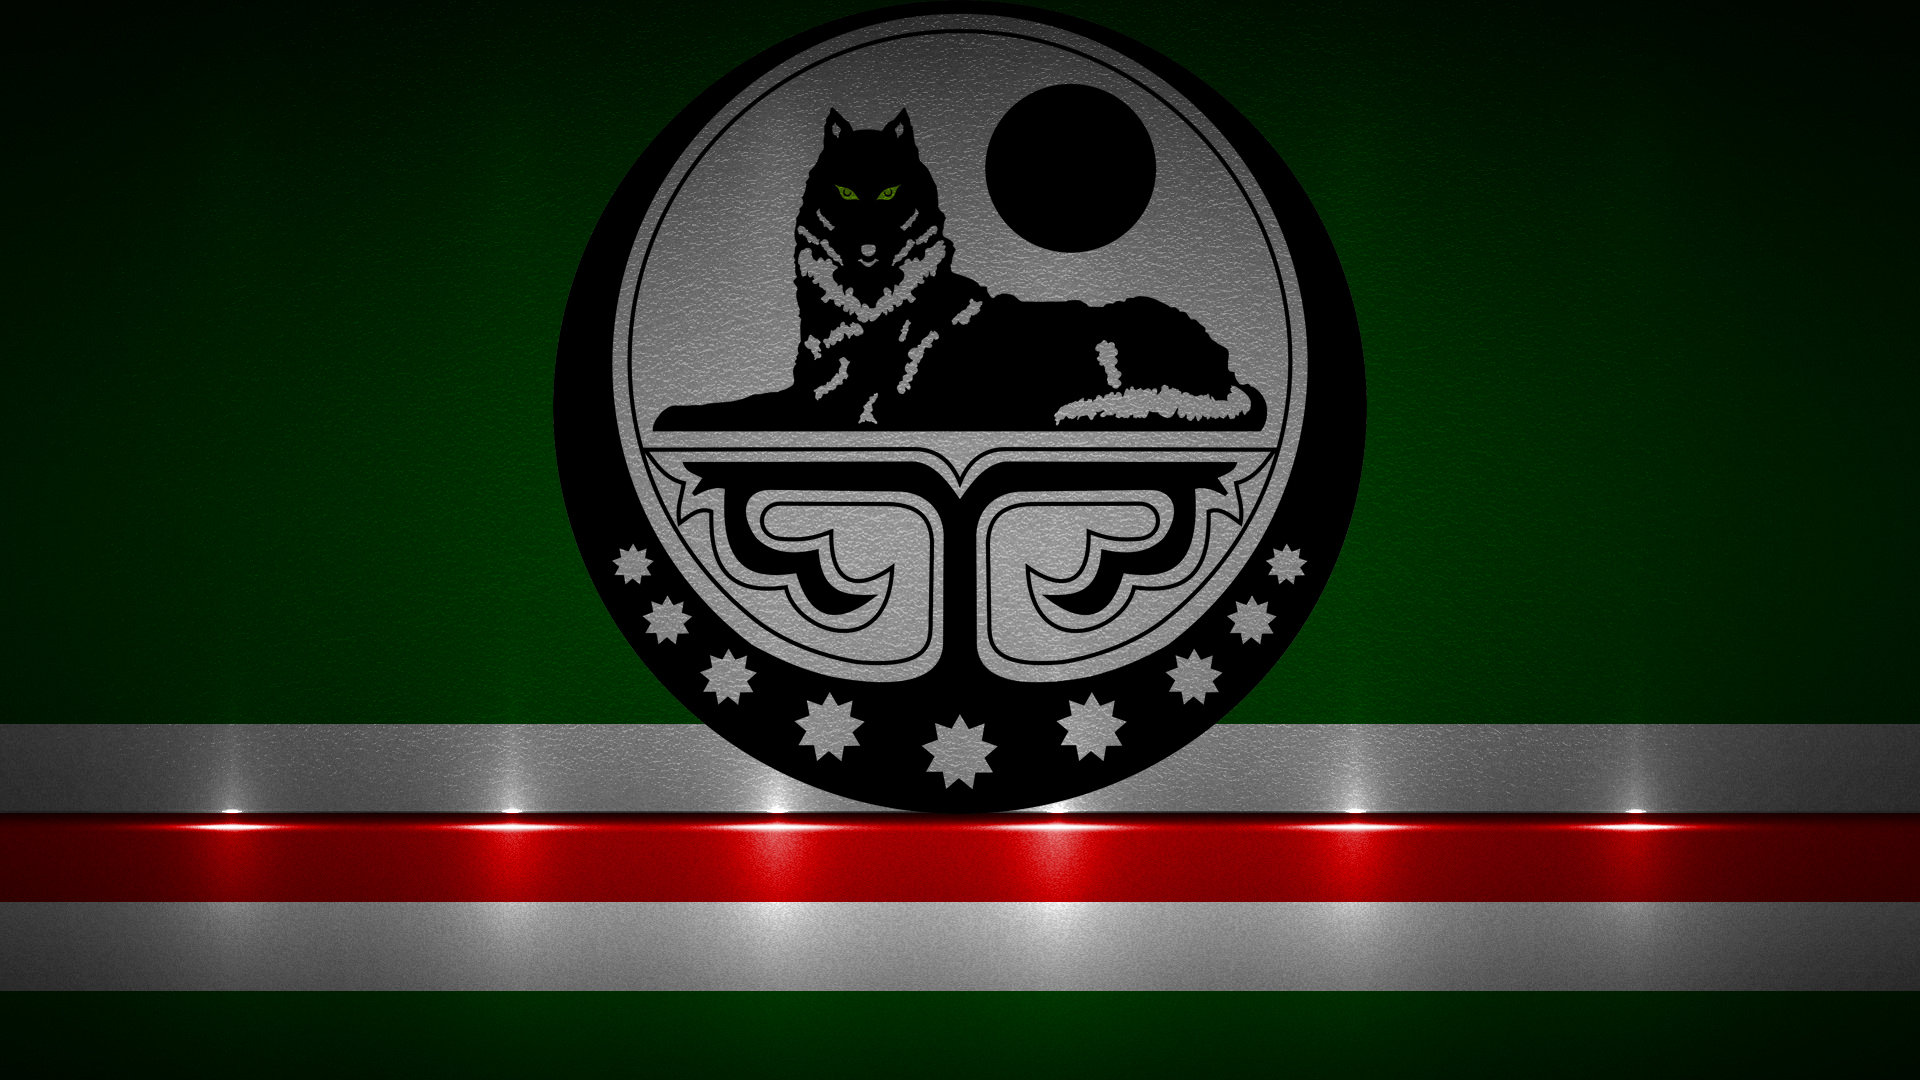 750086 descargar imagen miscelaneo, bandera de chechenia: fondos de pantalla y protectores de pantalla gratis